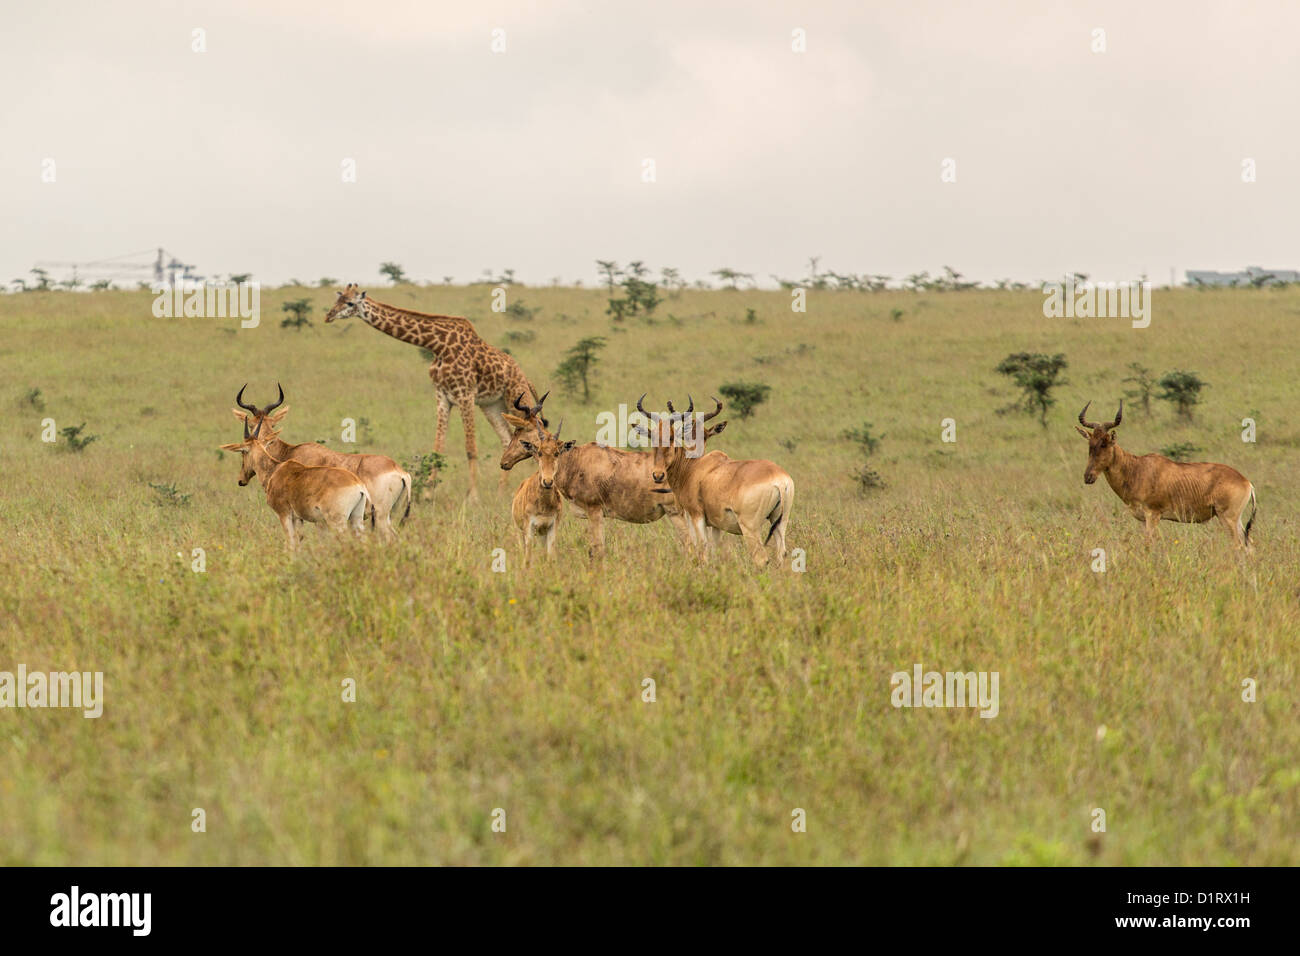 A giraffe grazing with impalas Stock Photo